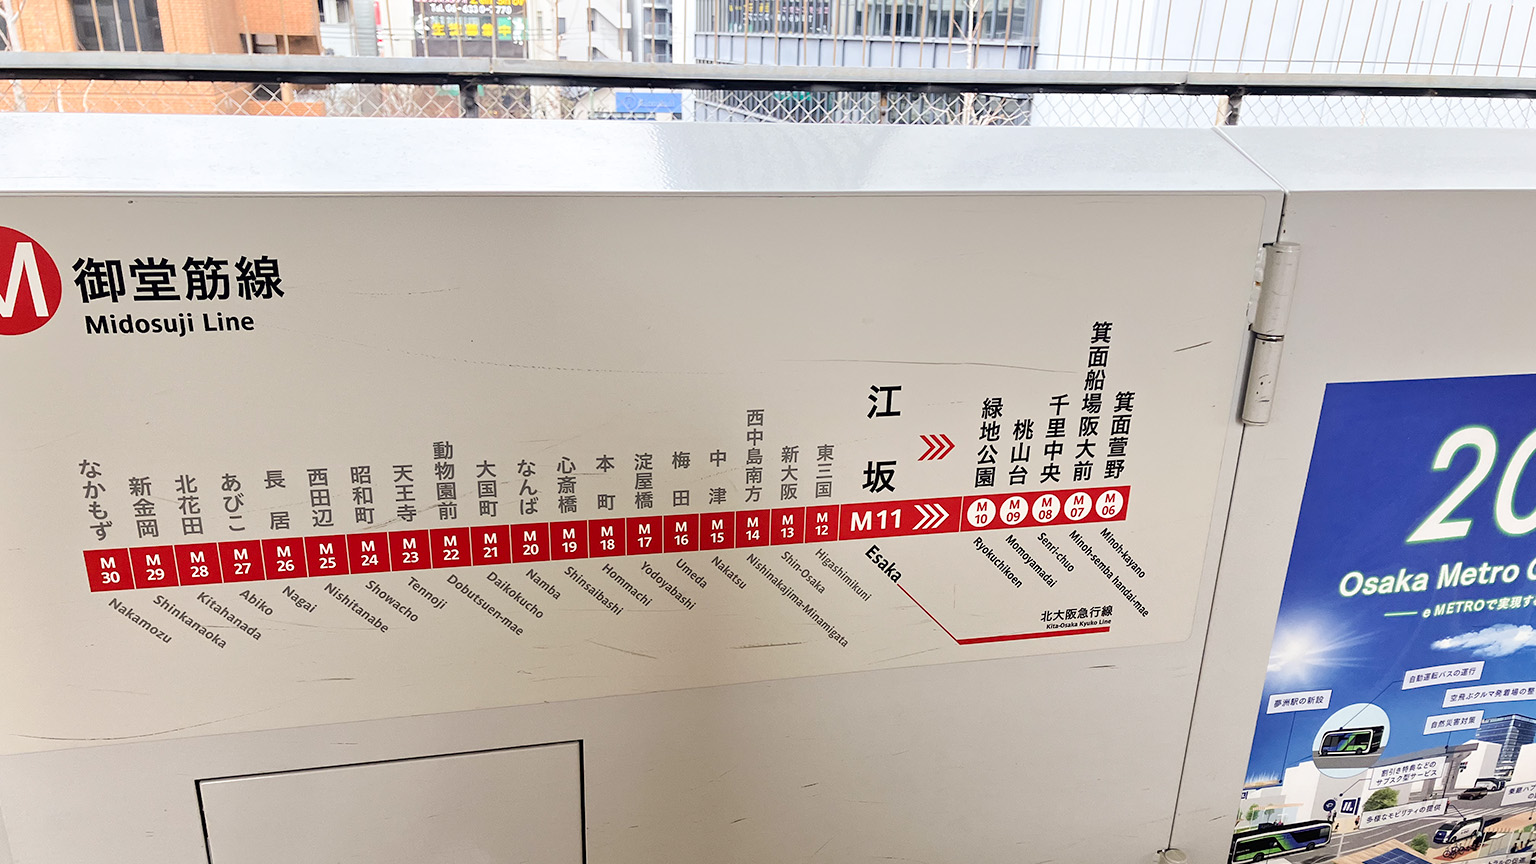 江坂駅の御堂筋線路線図の写真